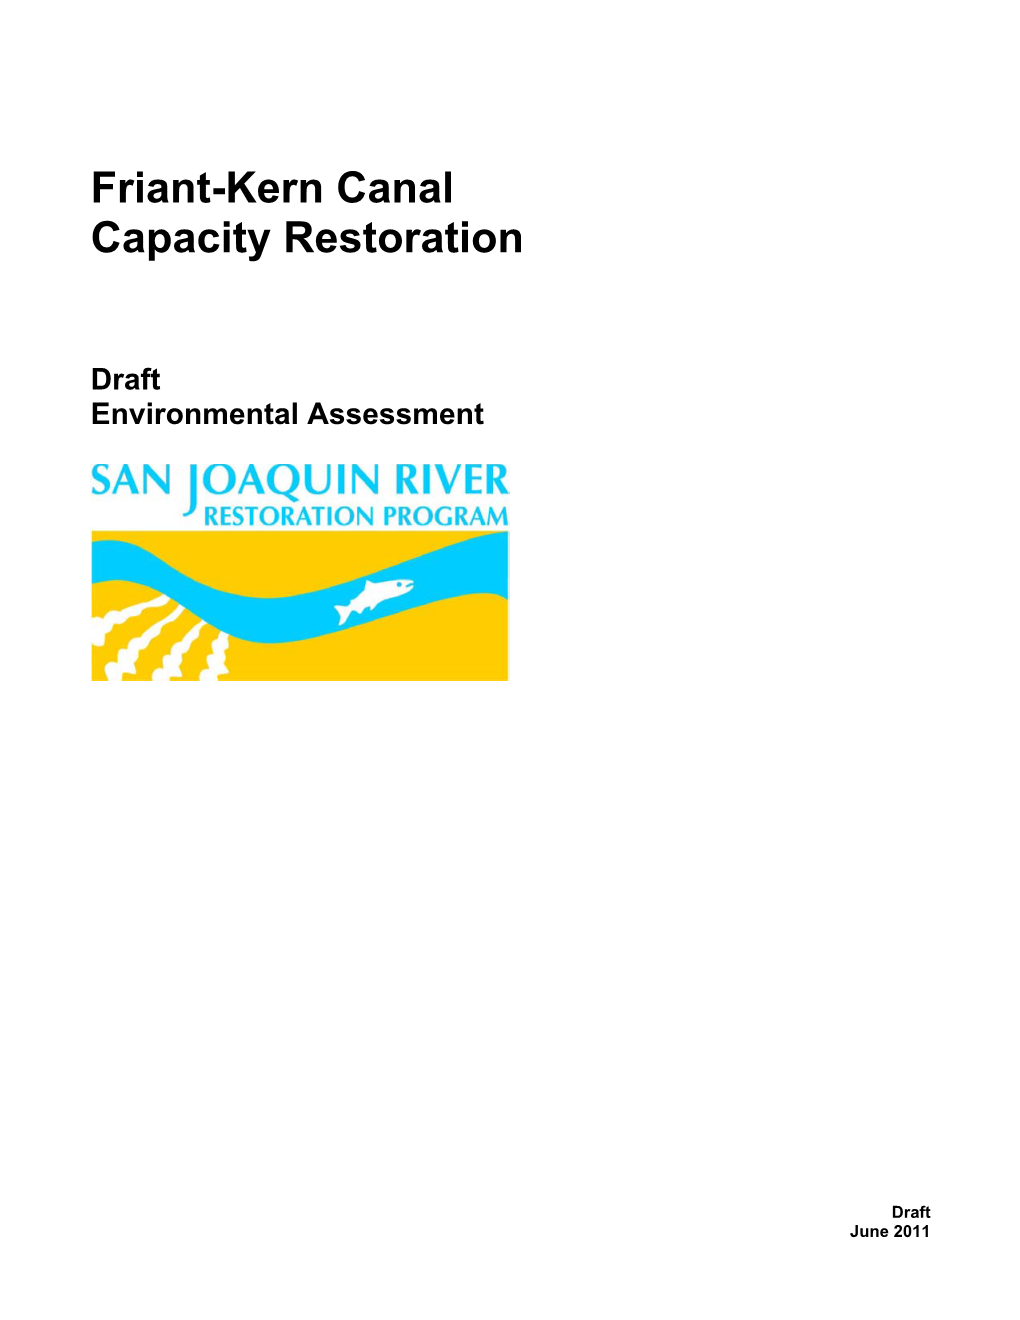 Friant-Kern Canal Capacity Restoration